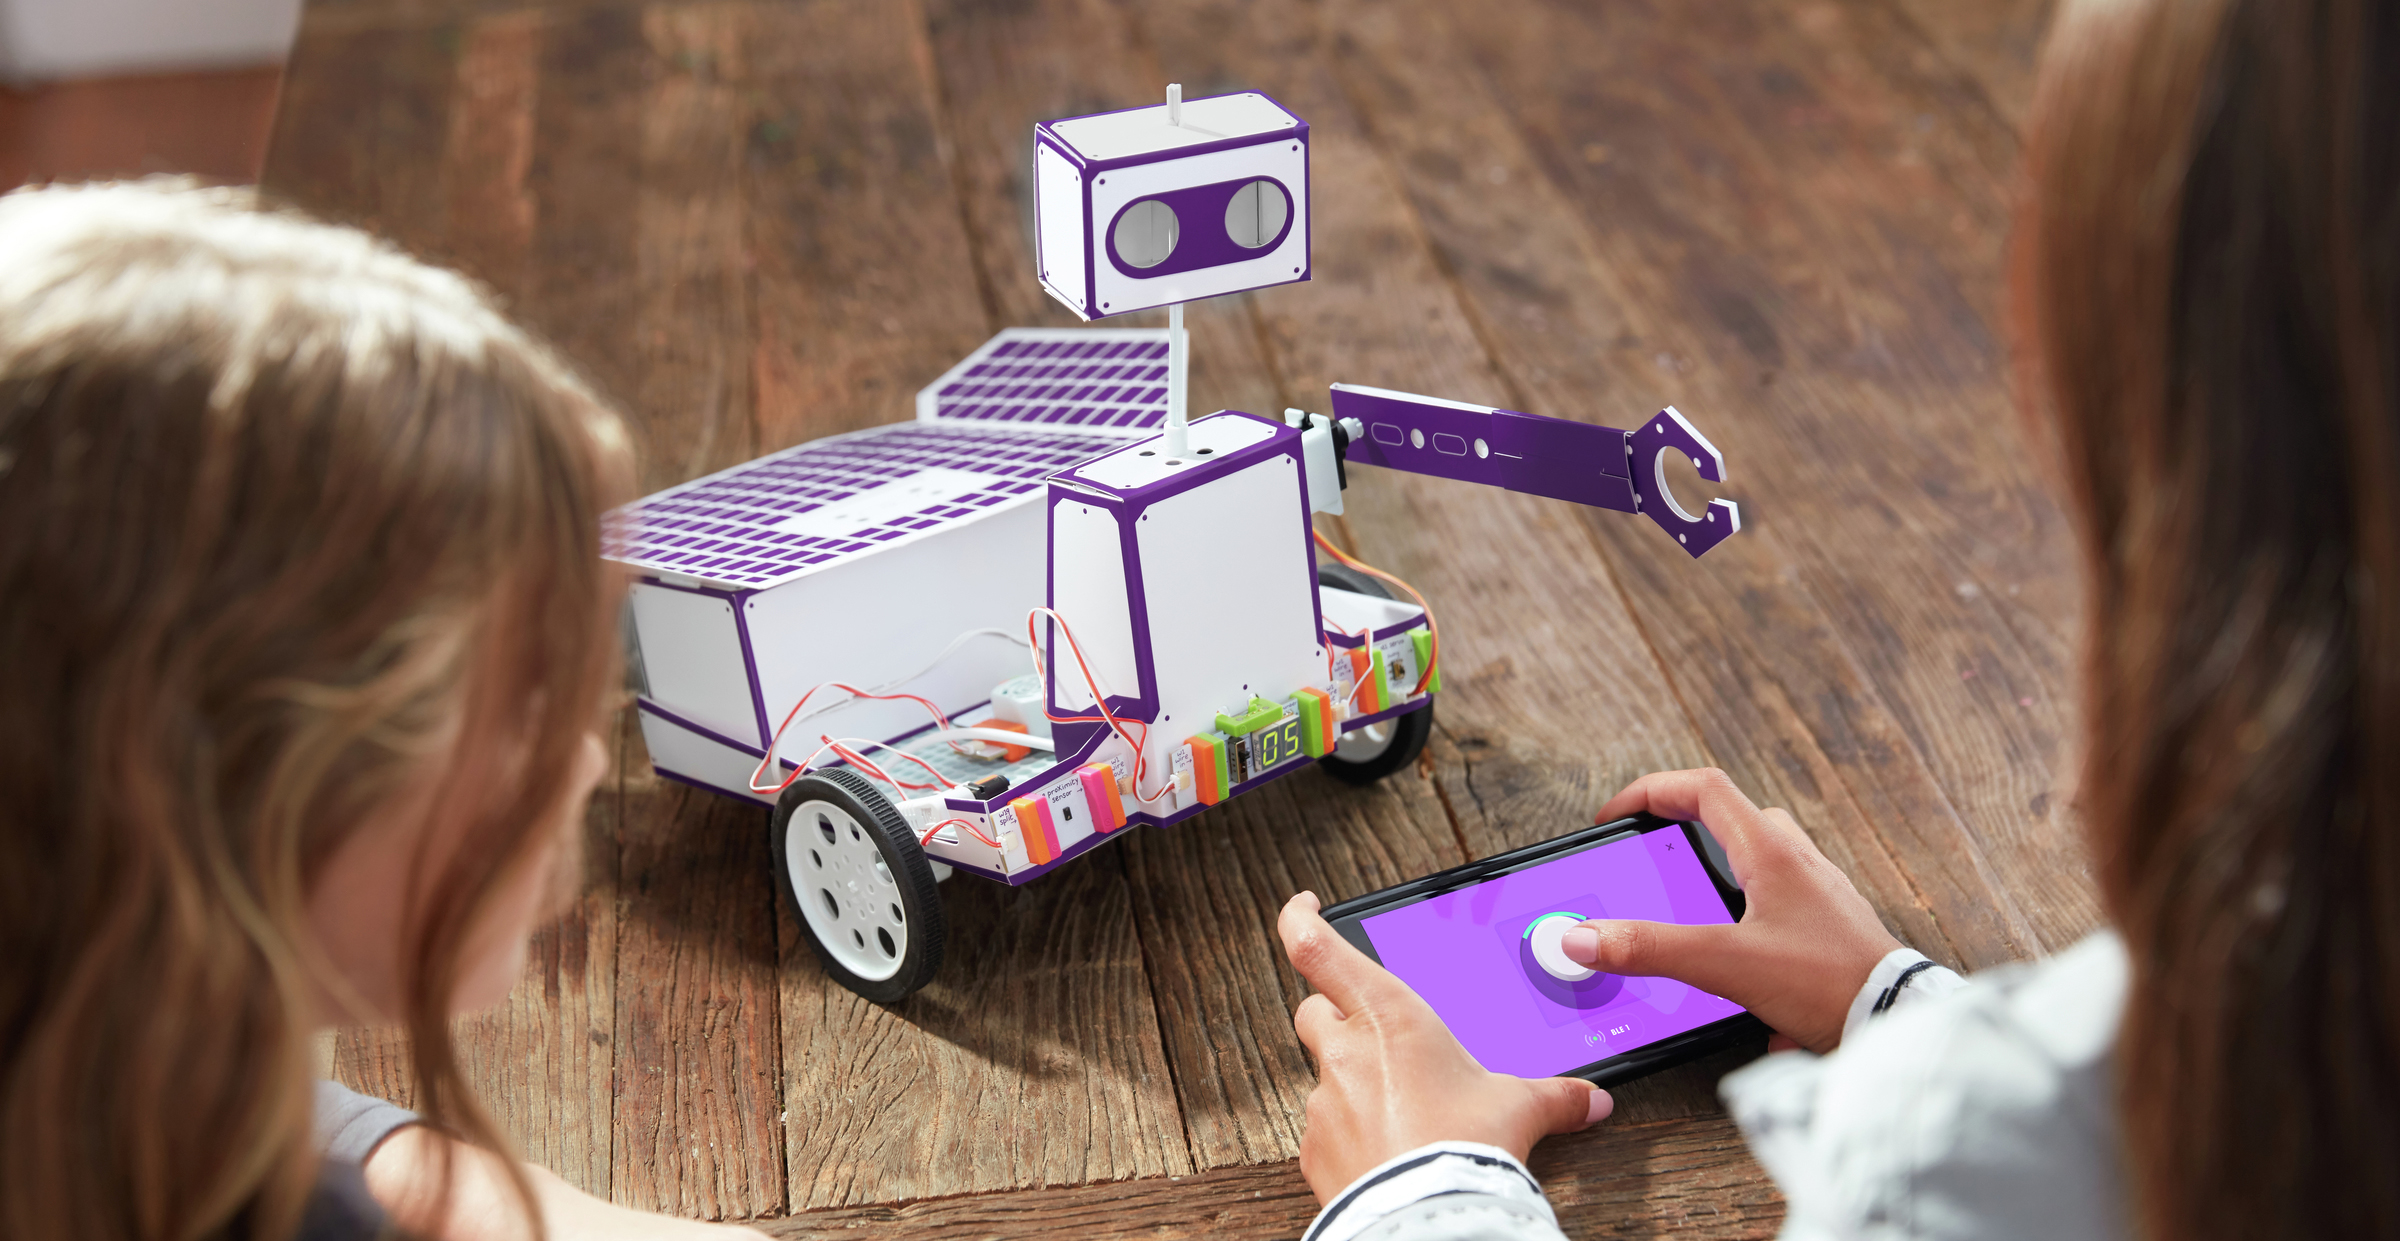 littleBits Inventor Kits